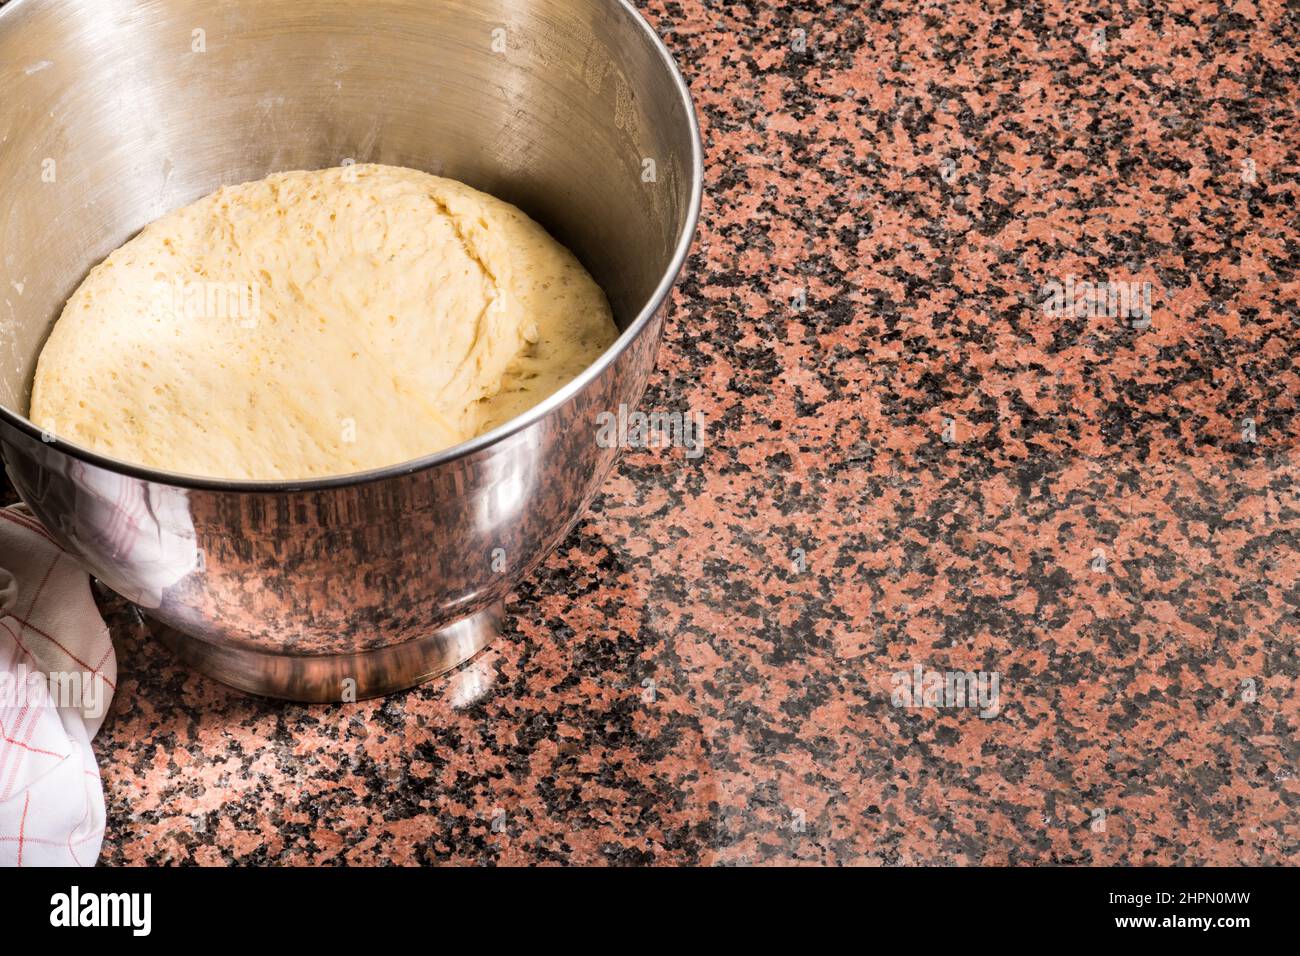 Yeast dough, knead, prepare, kitchen, stir, bowl, dough lifter, flour, yeast, water, salt. Bake, cooking, modern, the dough goes Stock Photo